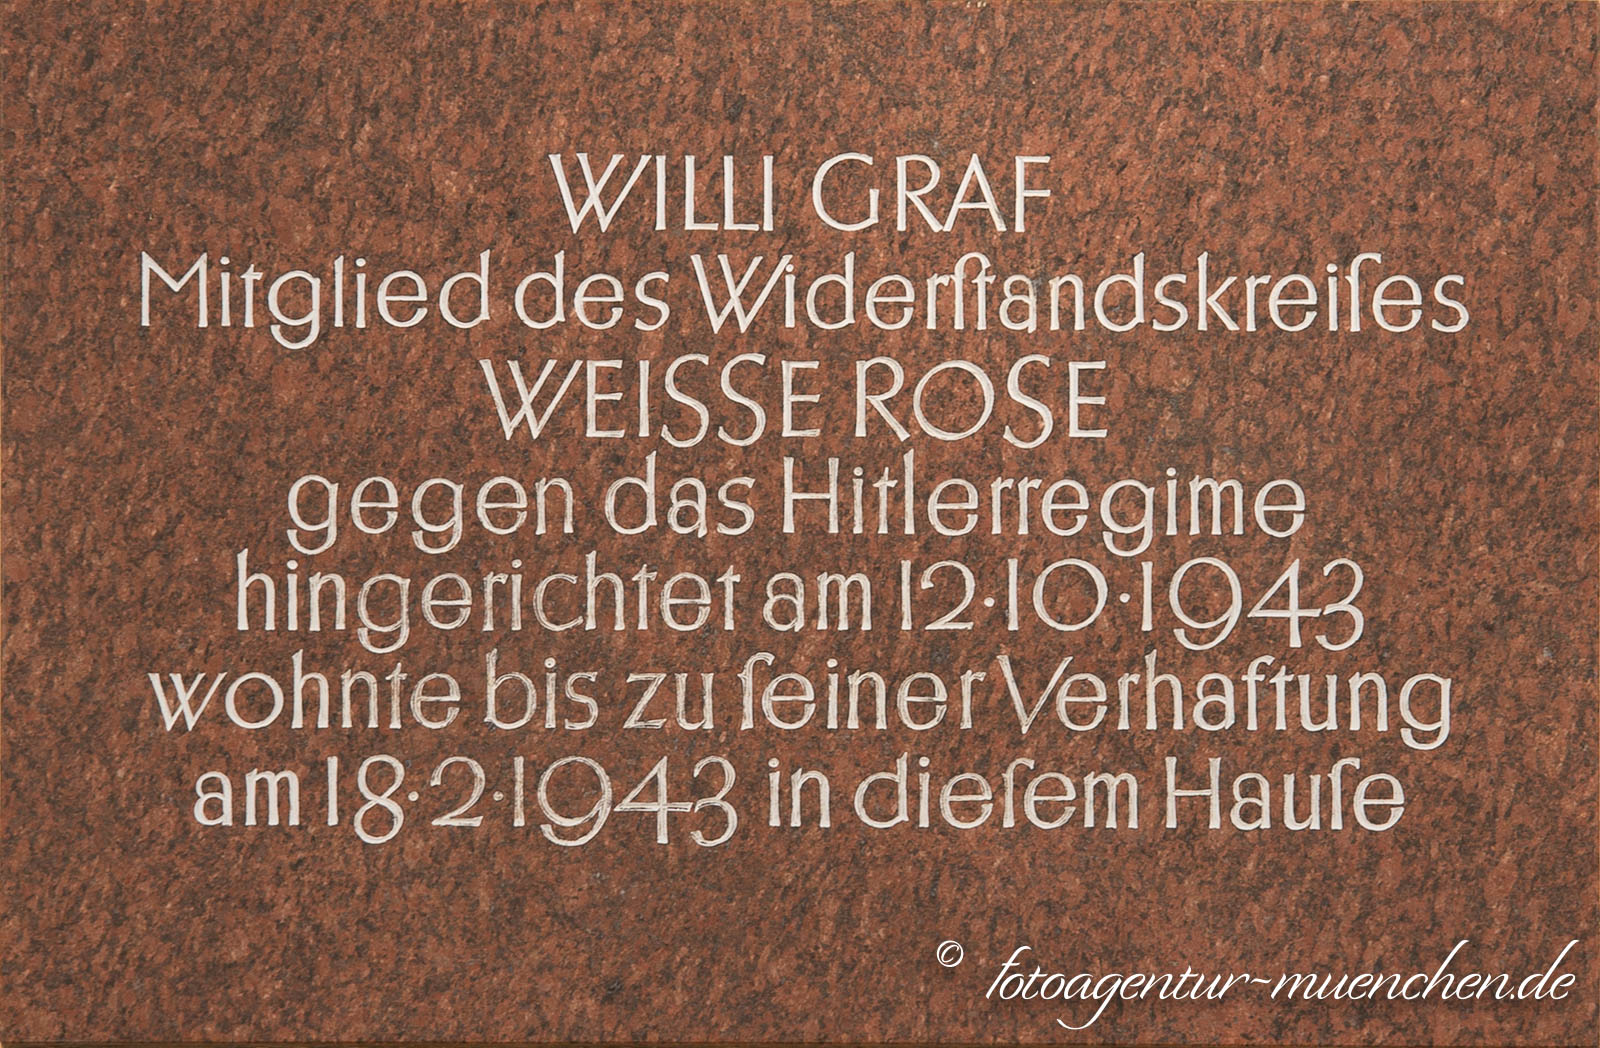 Graf Willi